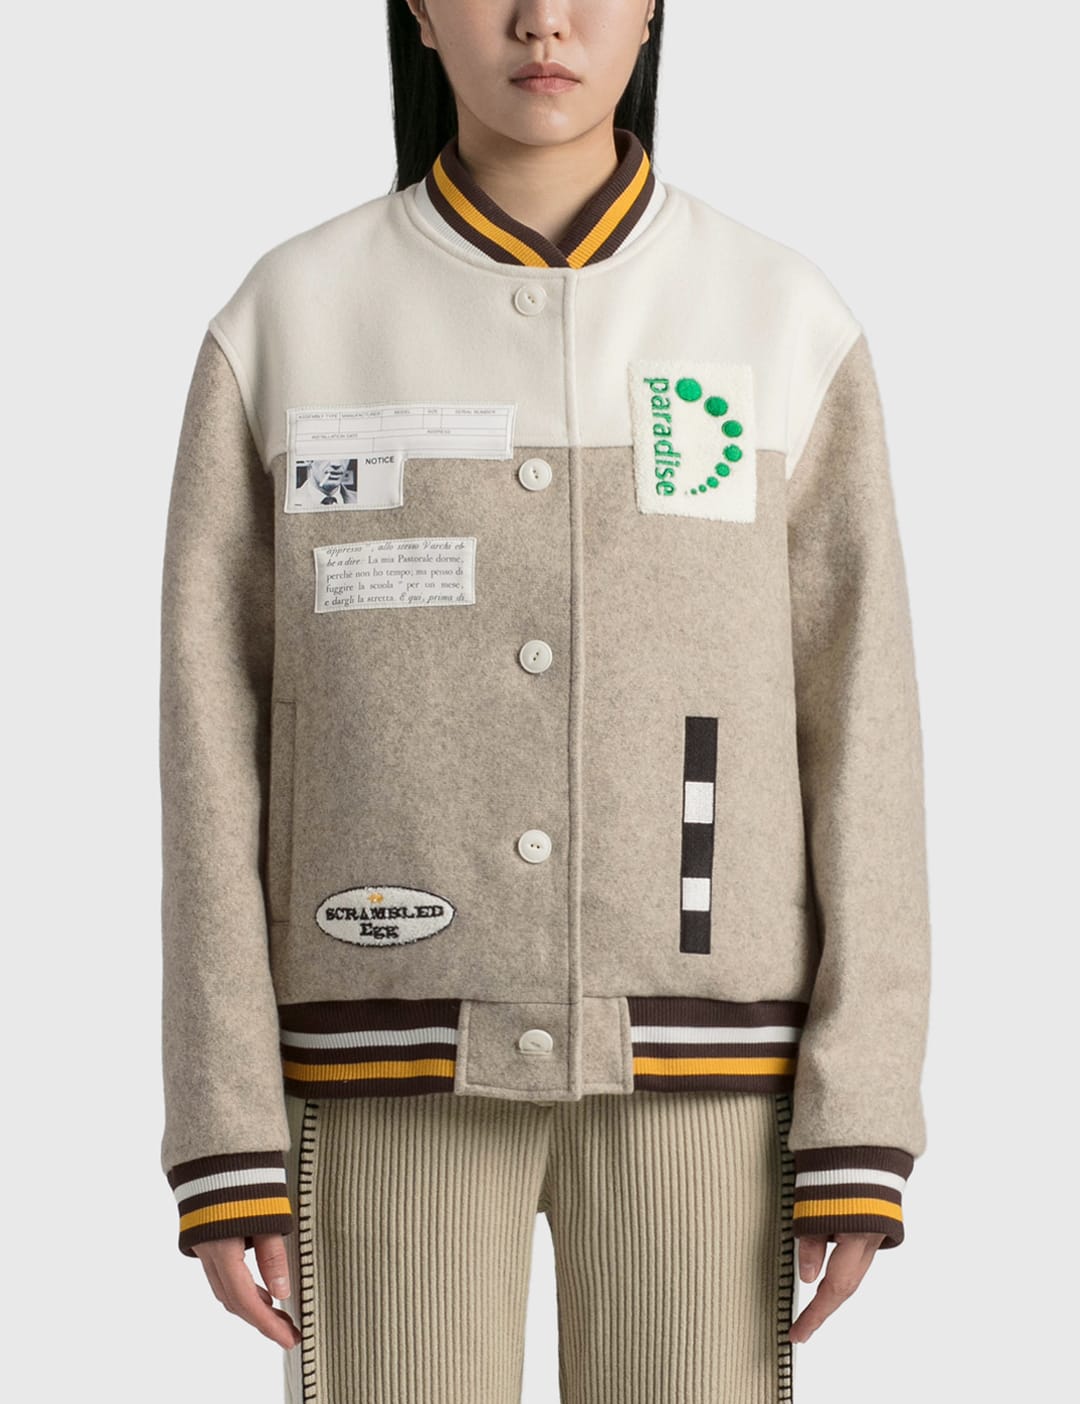 Kijun - Patch Stadium Jacket | HBX - Globally Curated Fashion and